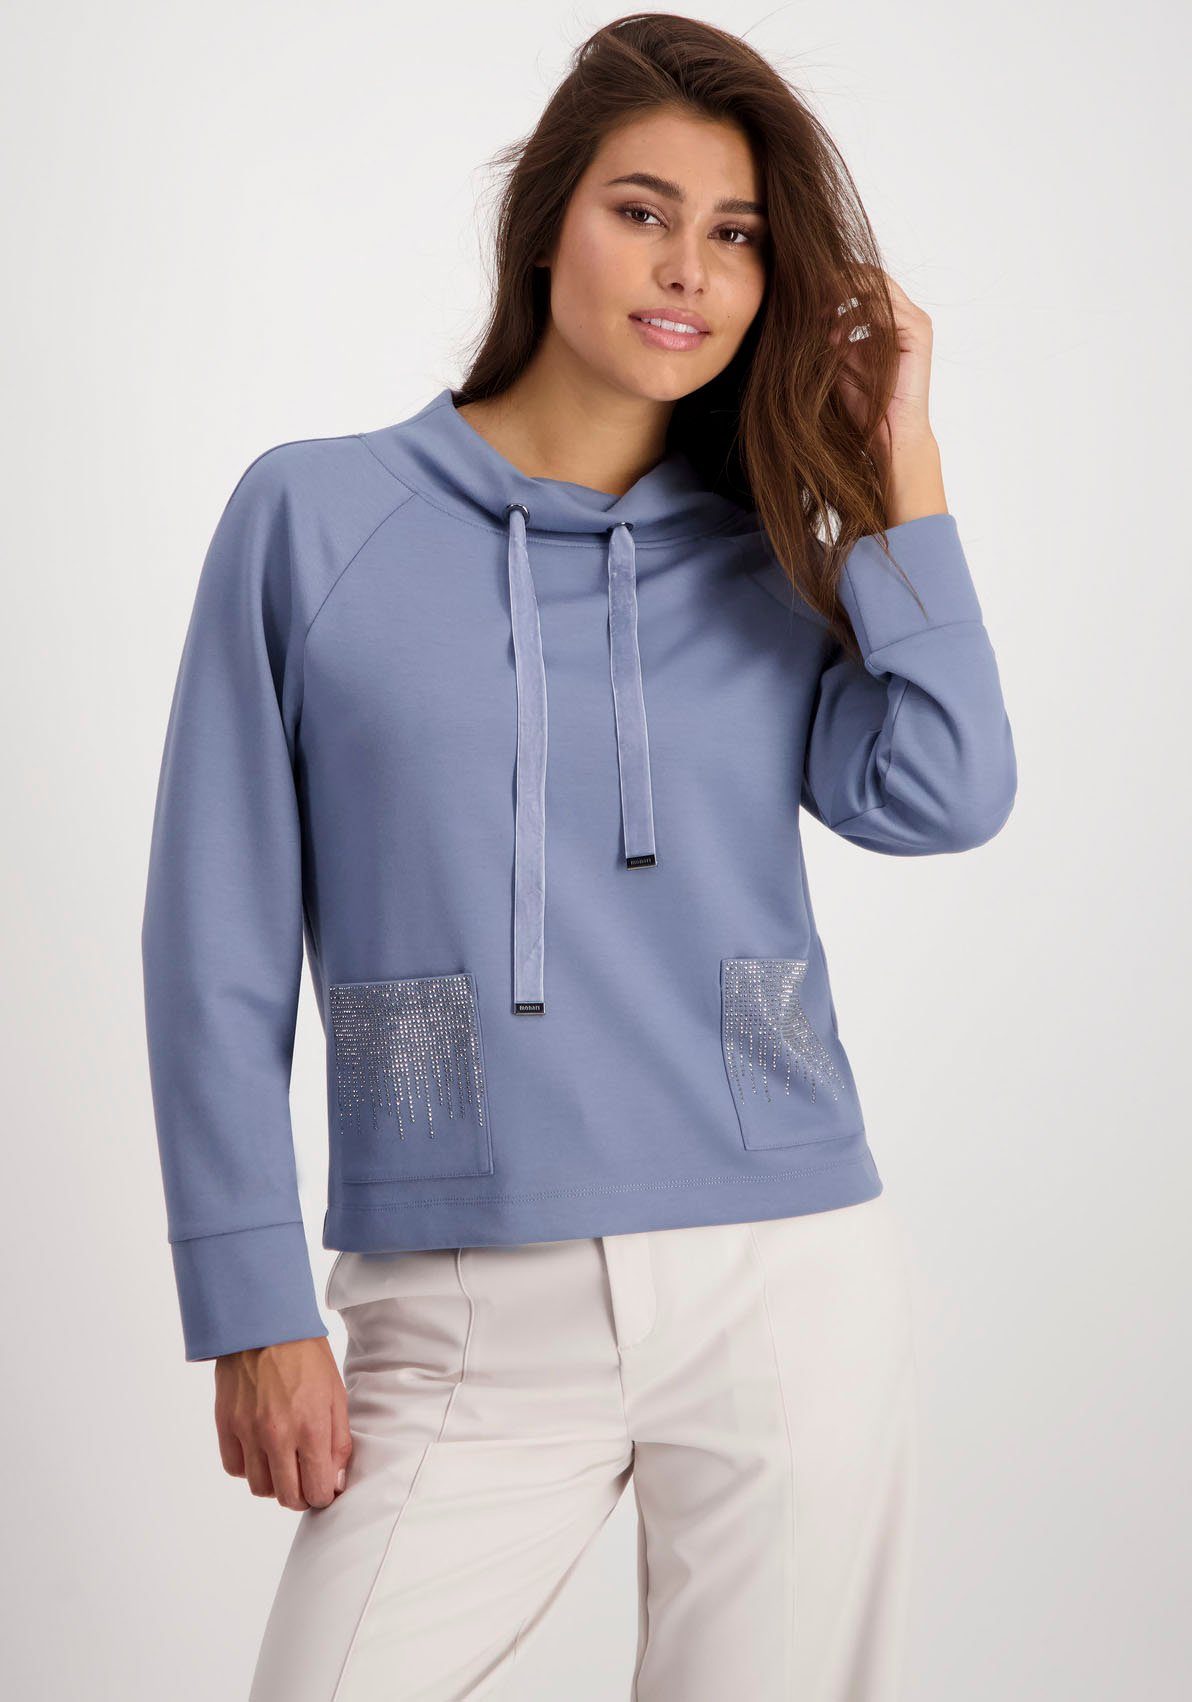 Monari Sweatshirt Sweatshirt Basic Schmuck mit Strass smokey blue | Hemden